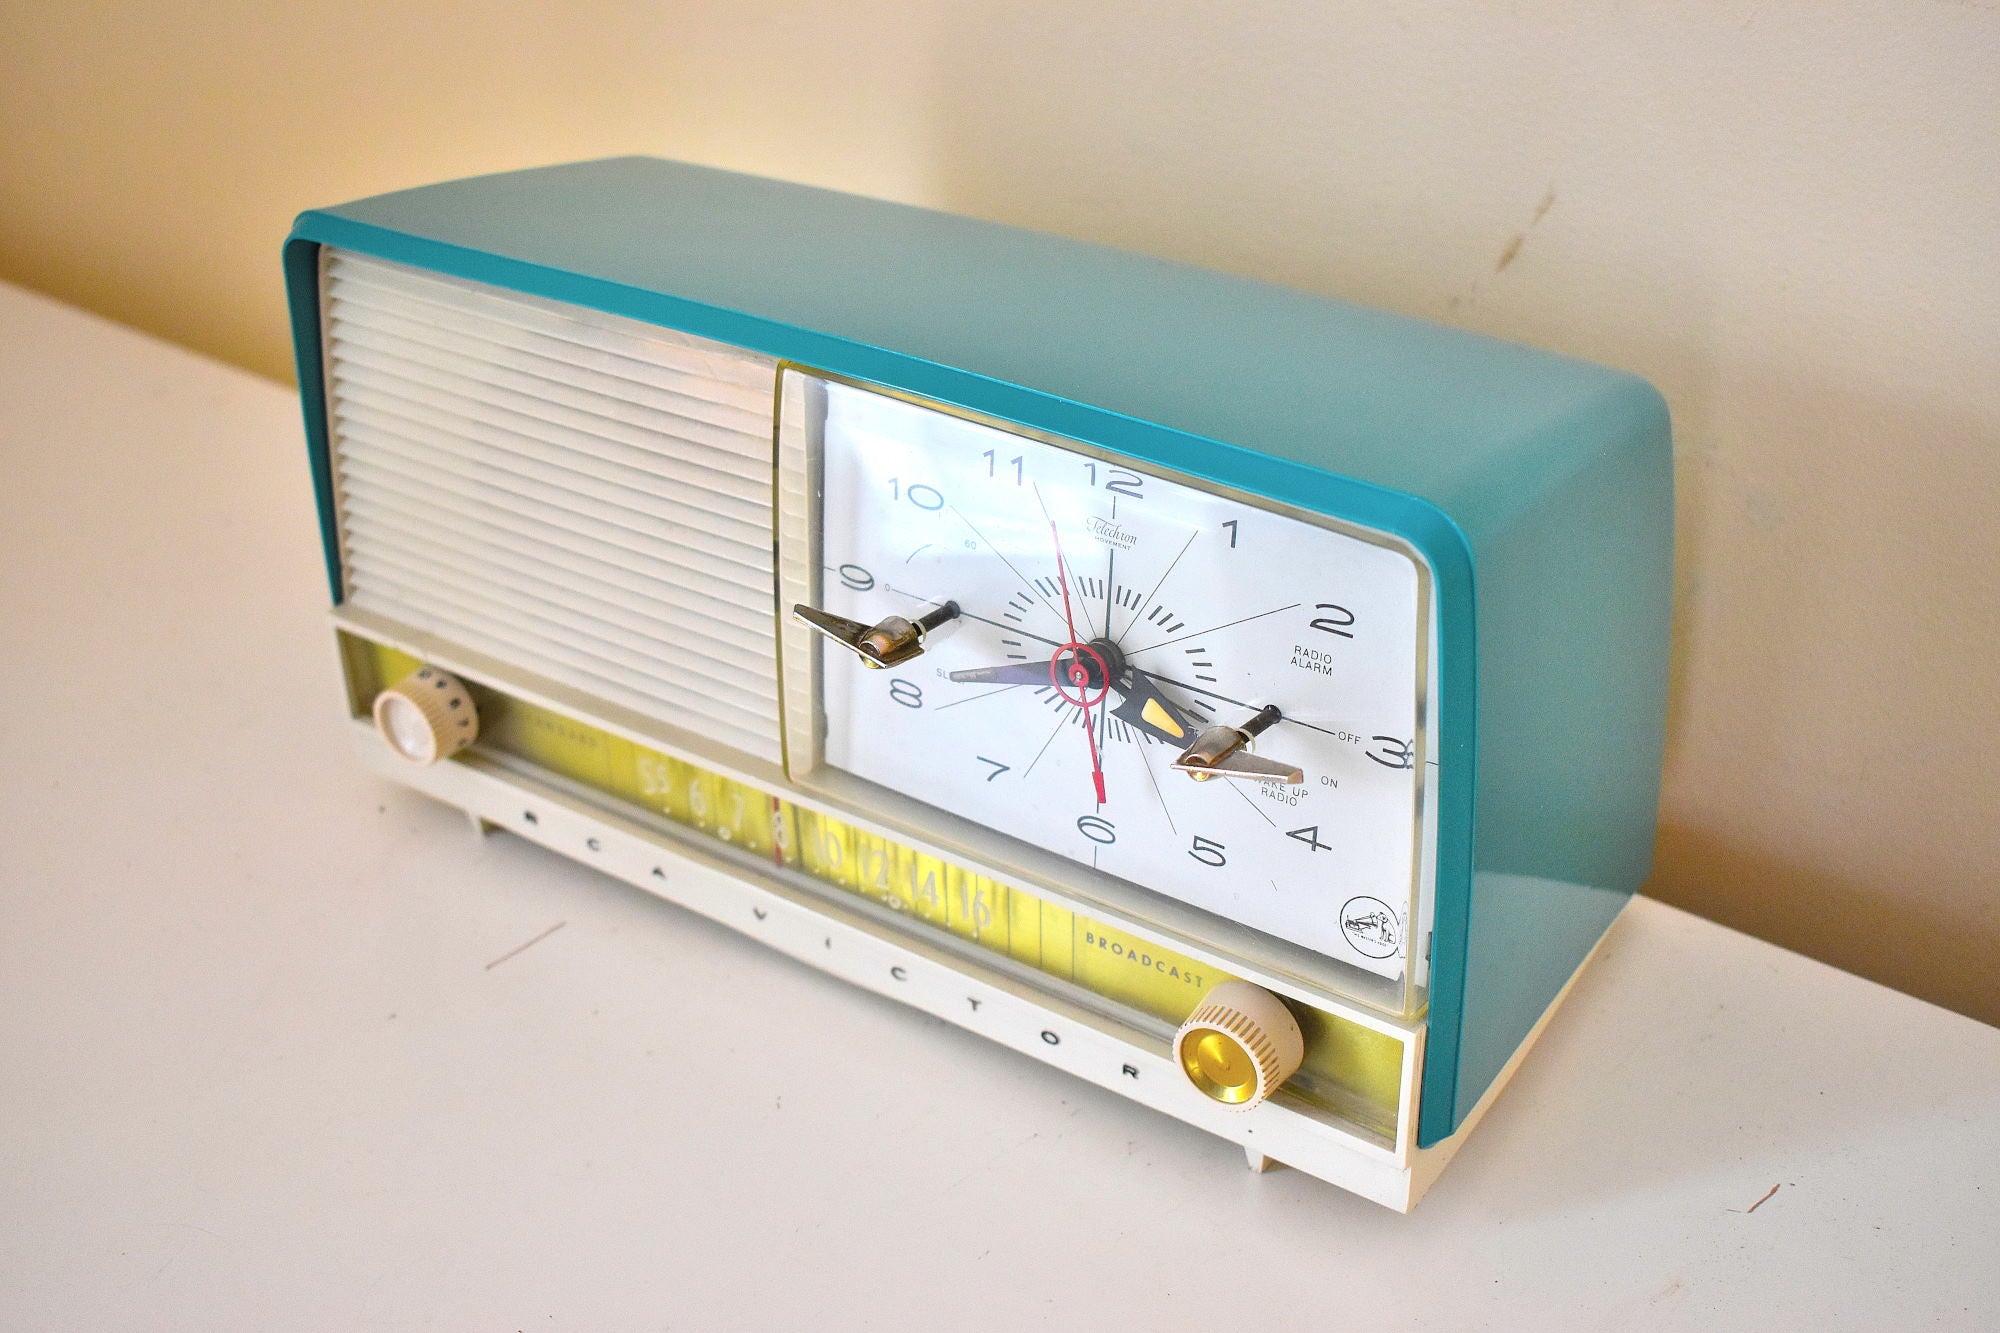 Monterey ターコイズとホワイト 1956 RCA Victor 8-C-7 ヴィンテージ真空管 AM クロック ラジオ Real Looker!